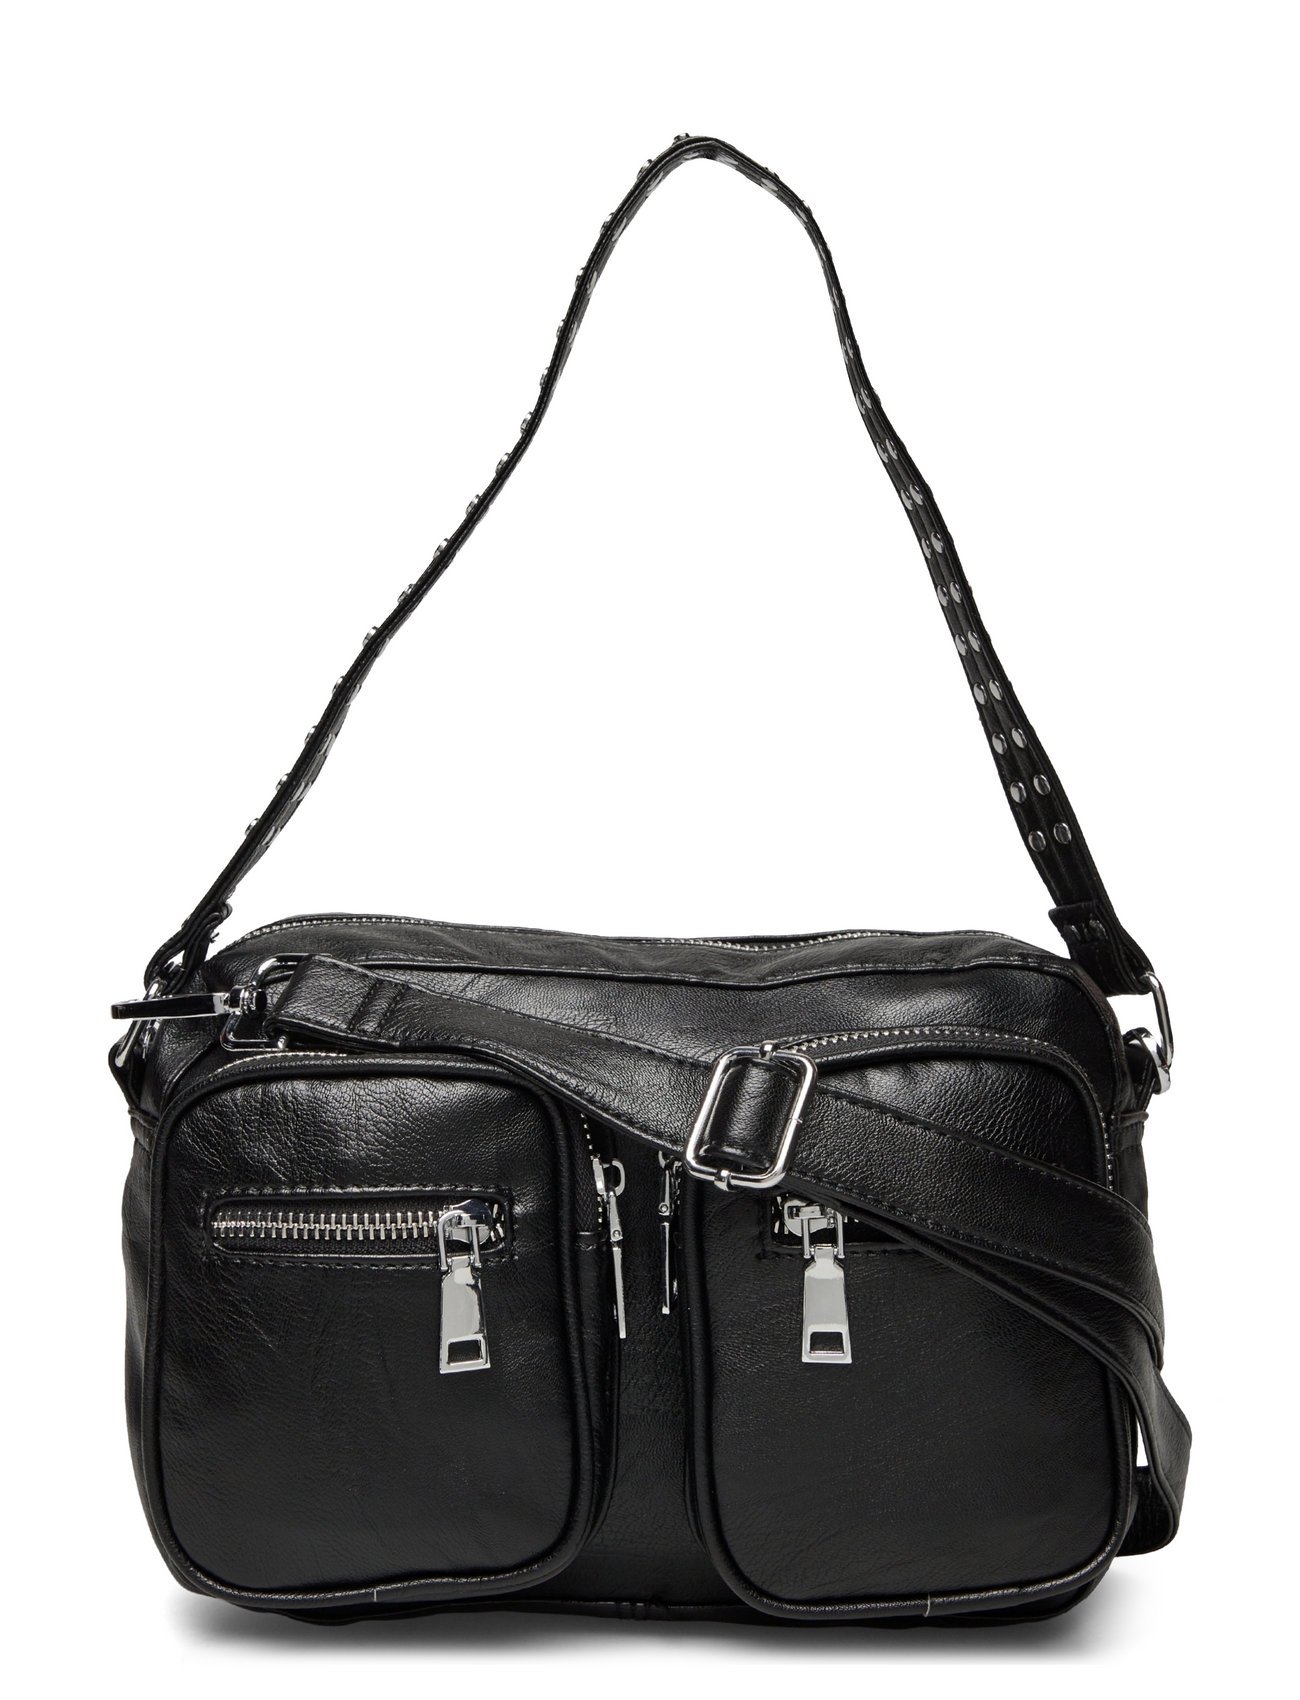 Noella Celina Bag Black Leather Look - Shoulder bags - Boozt.com